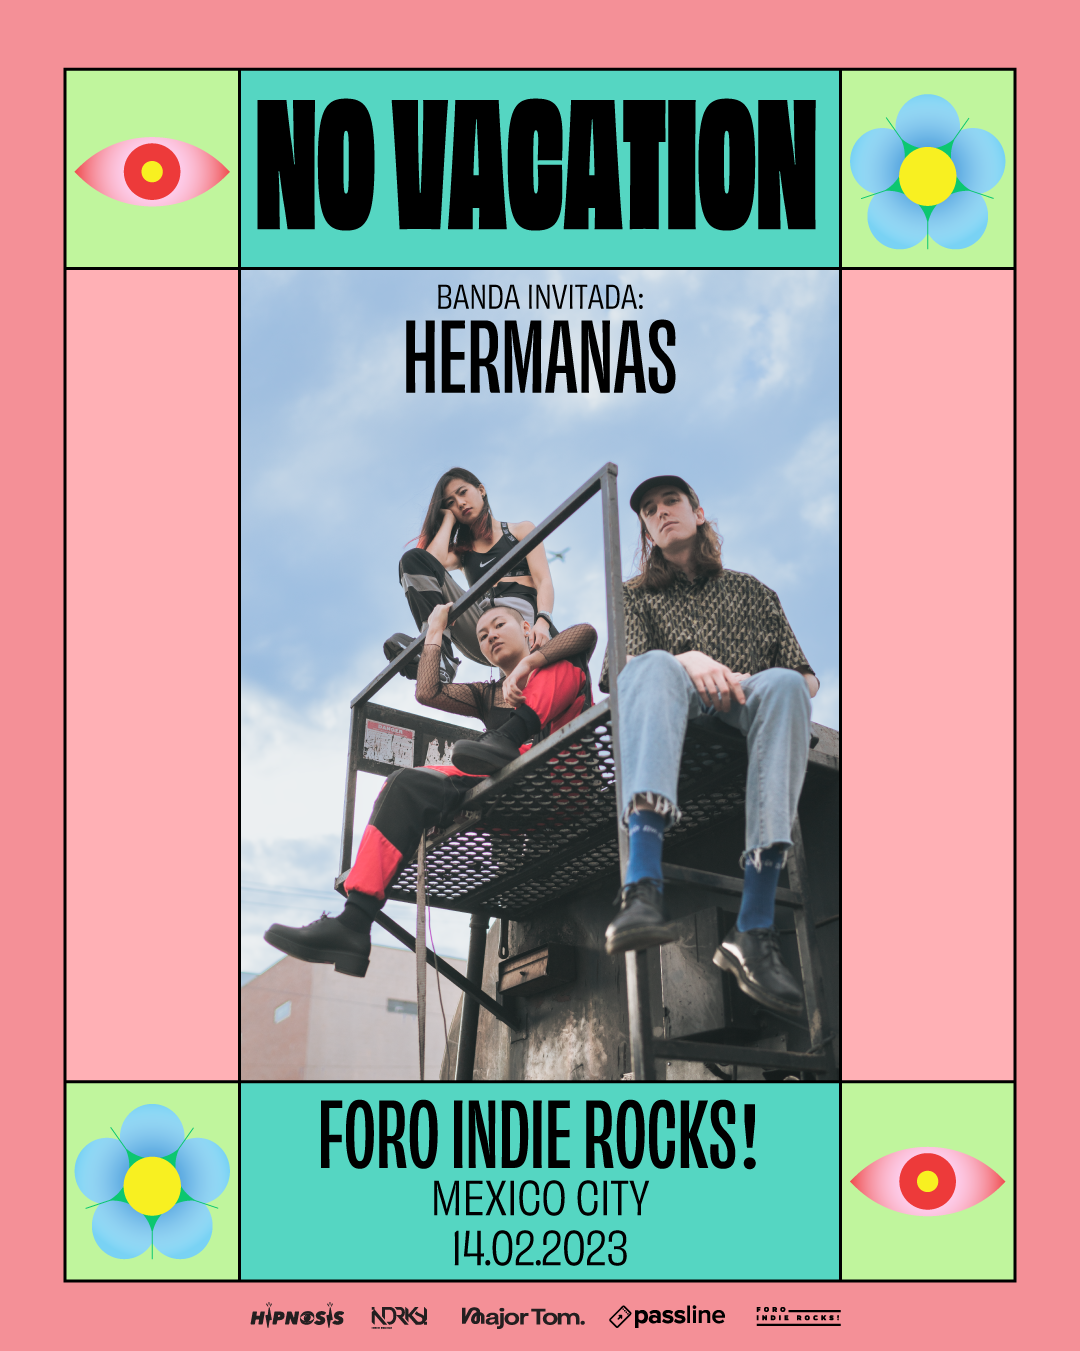 No vacation_Hermanas